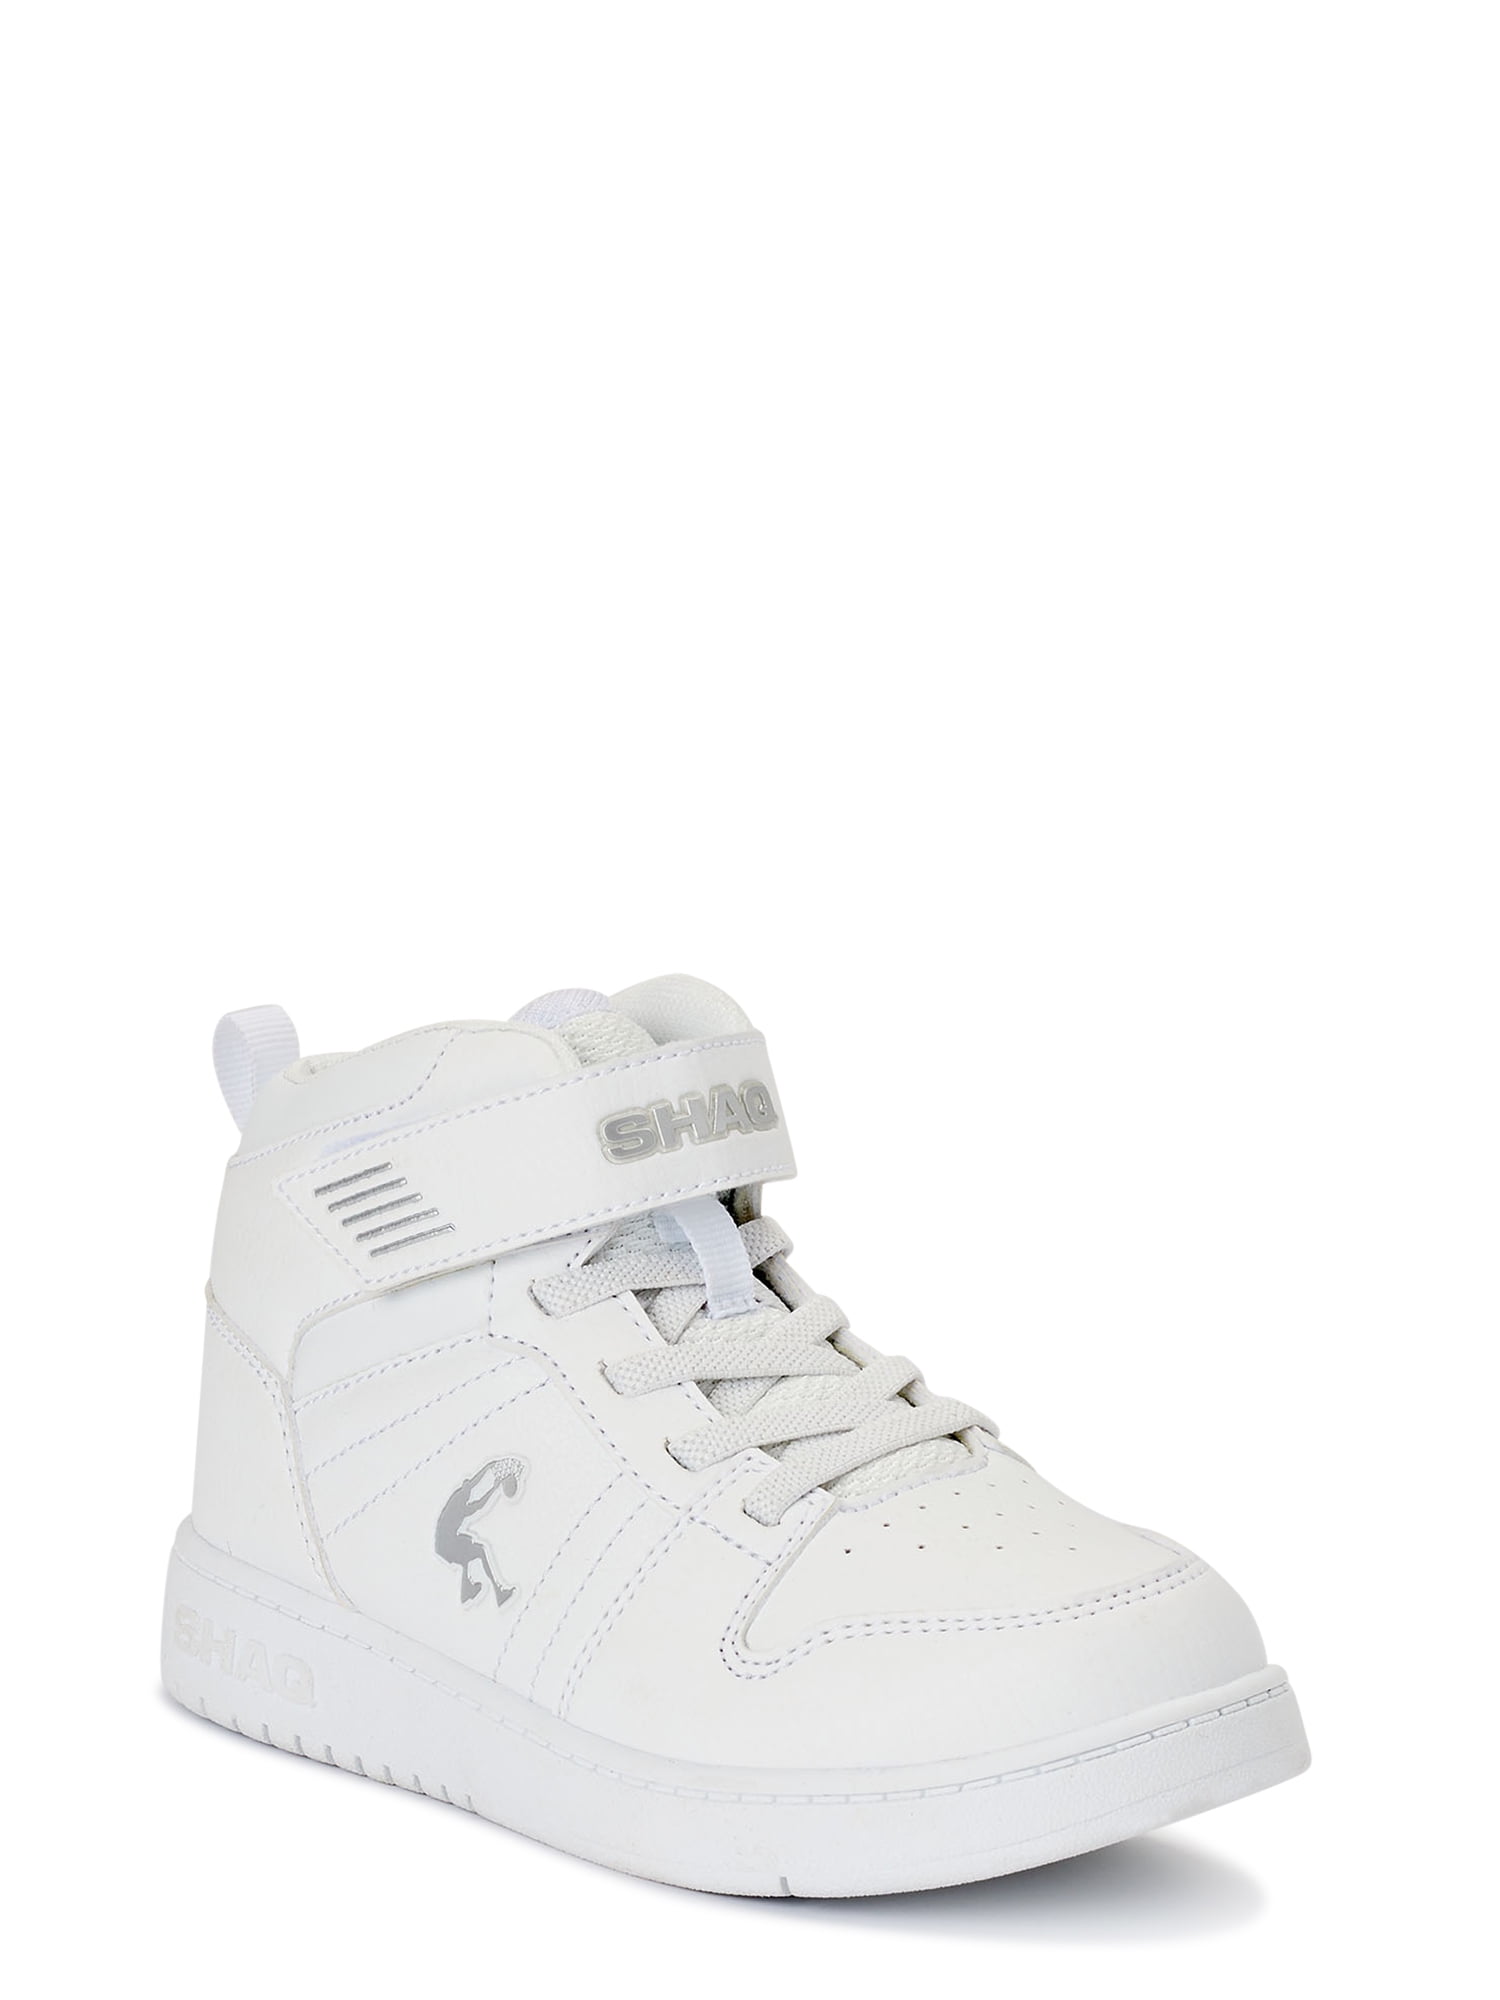 Black/White Shaq Kids Shoes Flavor Athletic Sneaker Size 13